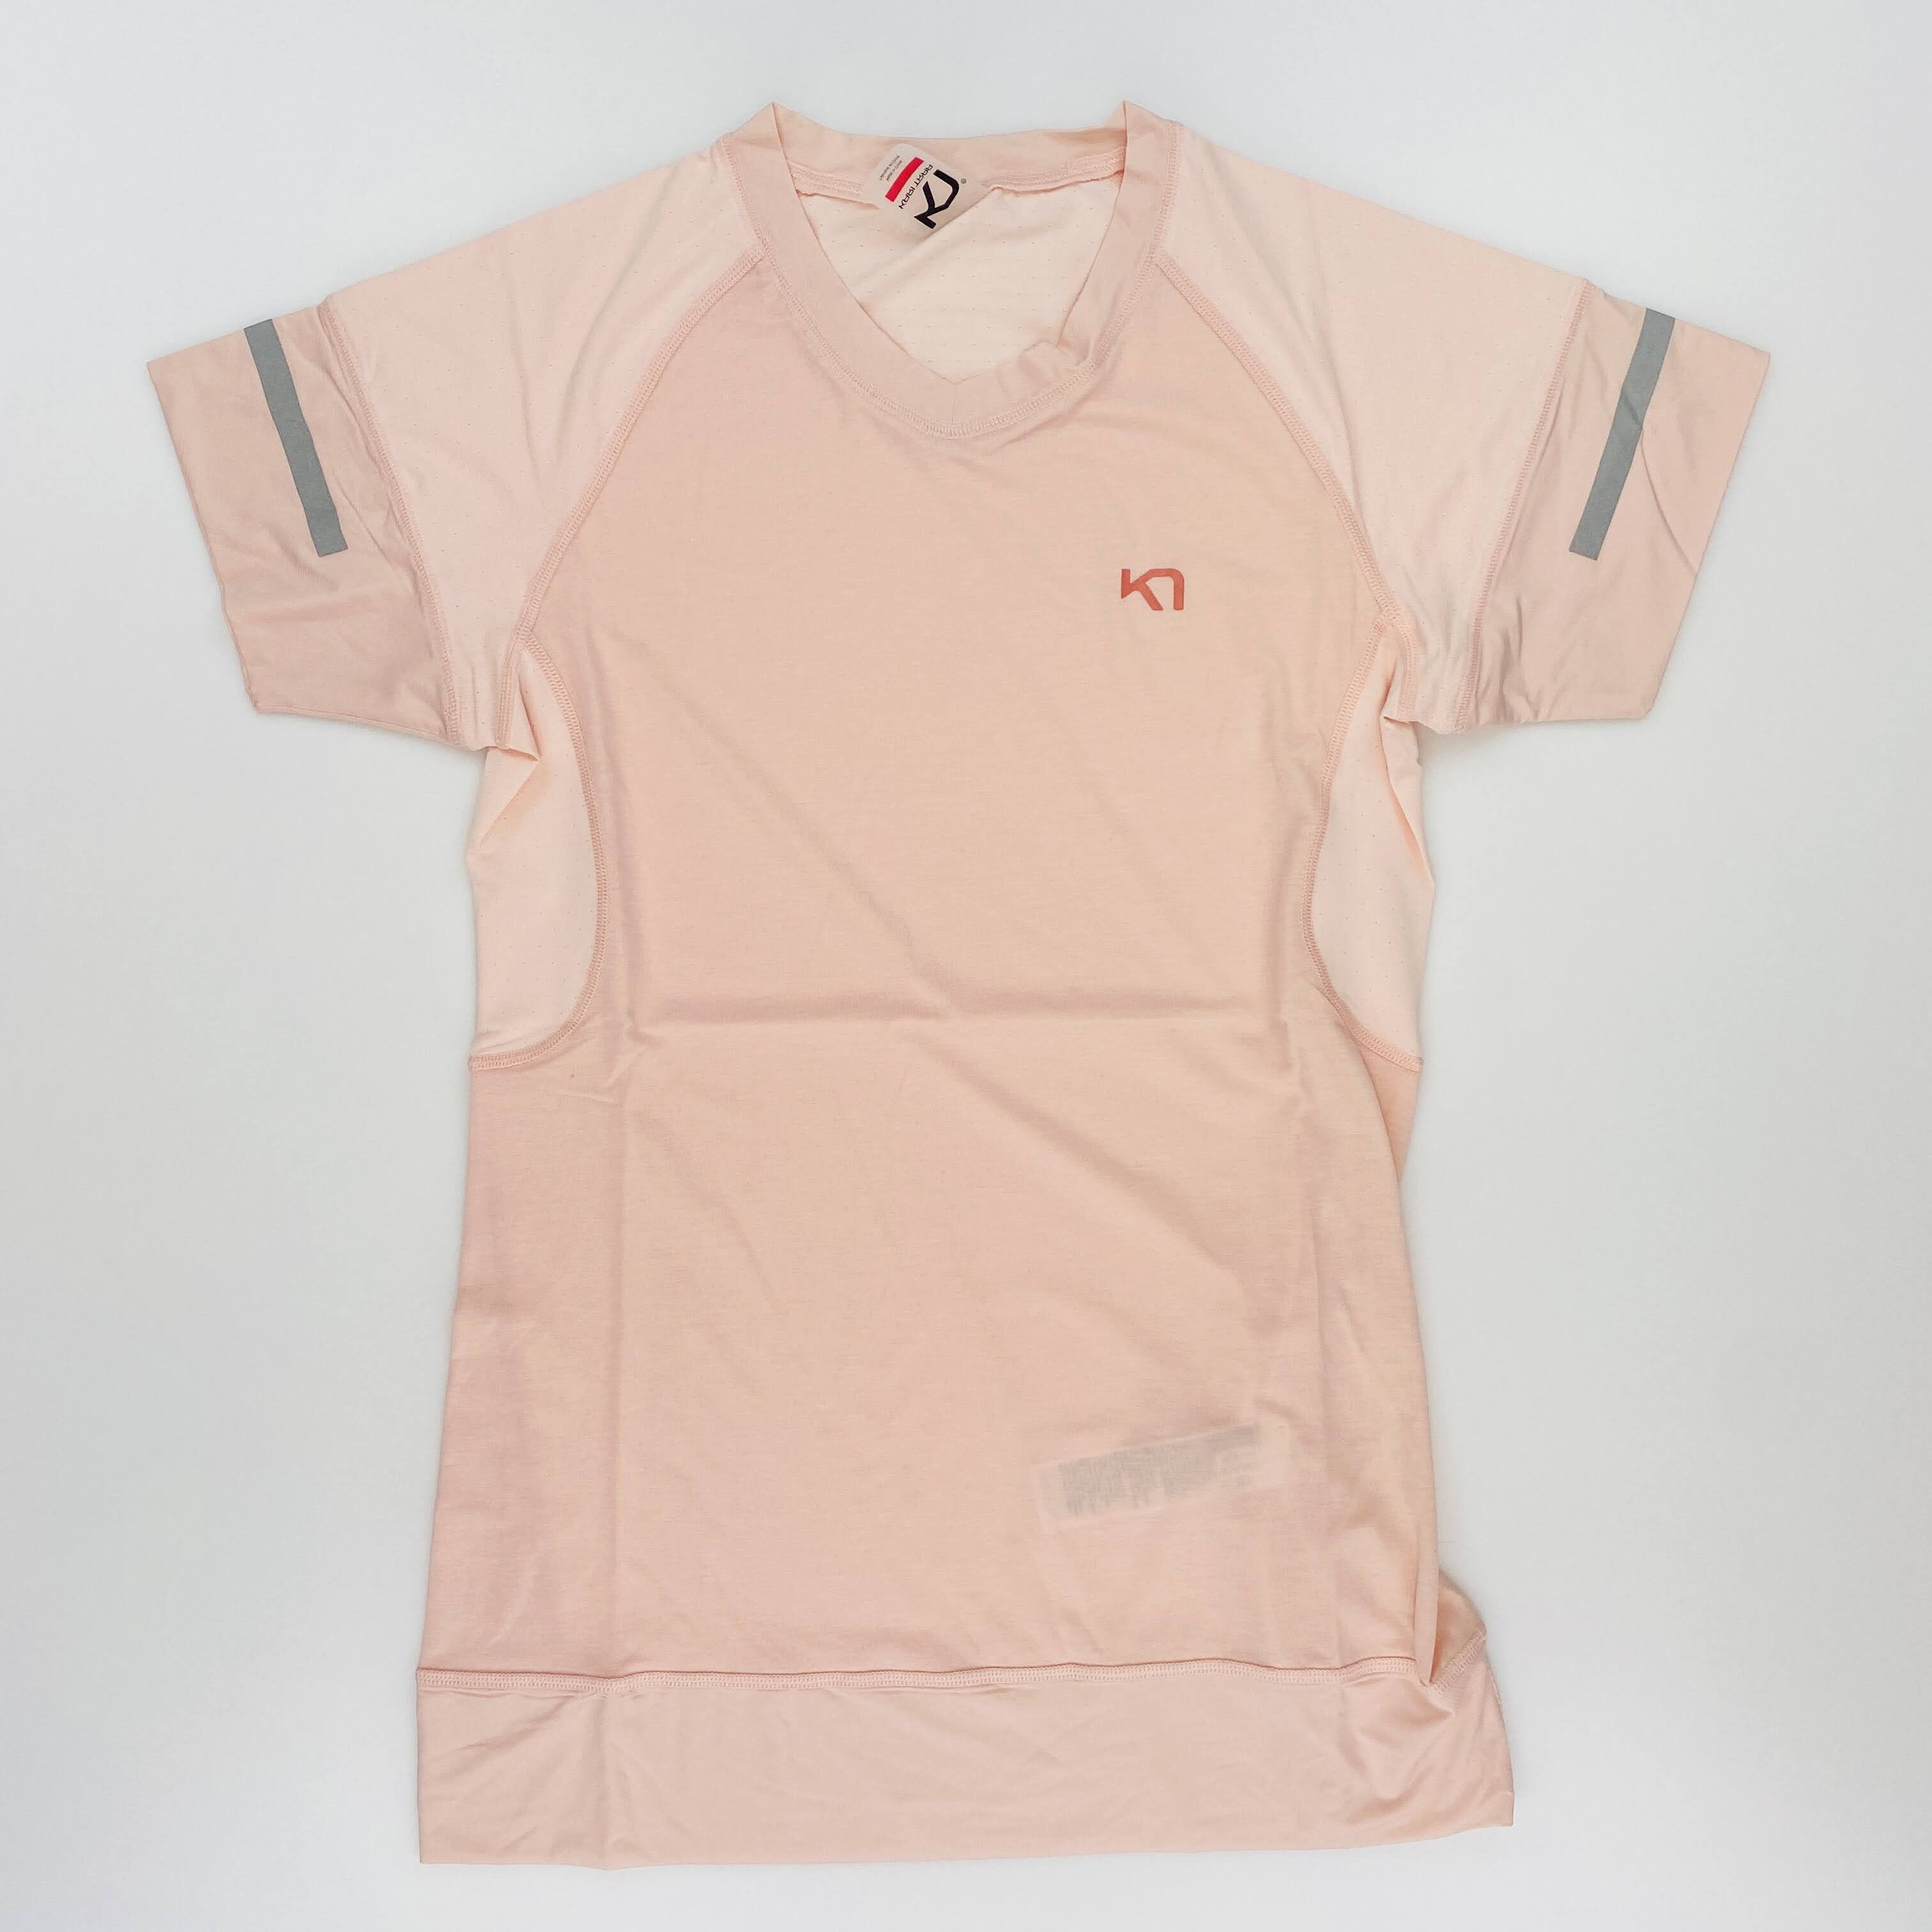 Kari Traa Sigrun Tee - Seconde main T-shirt femme - Rose - M | Hardloop